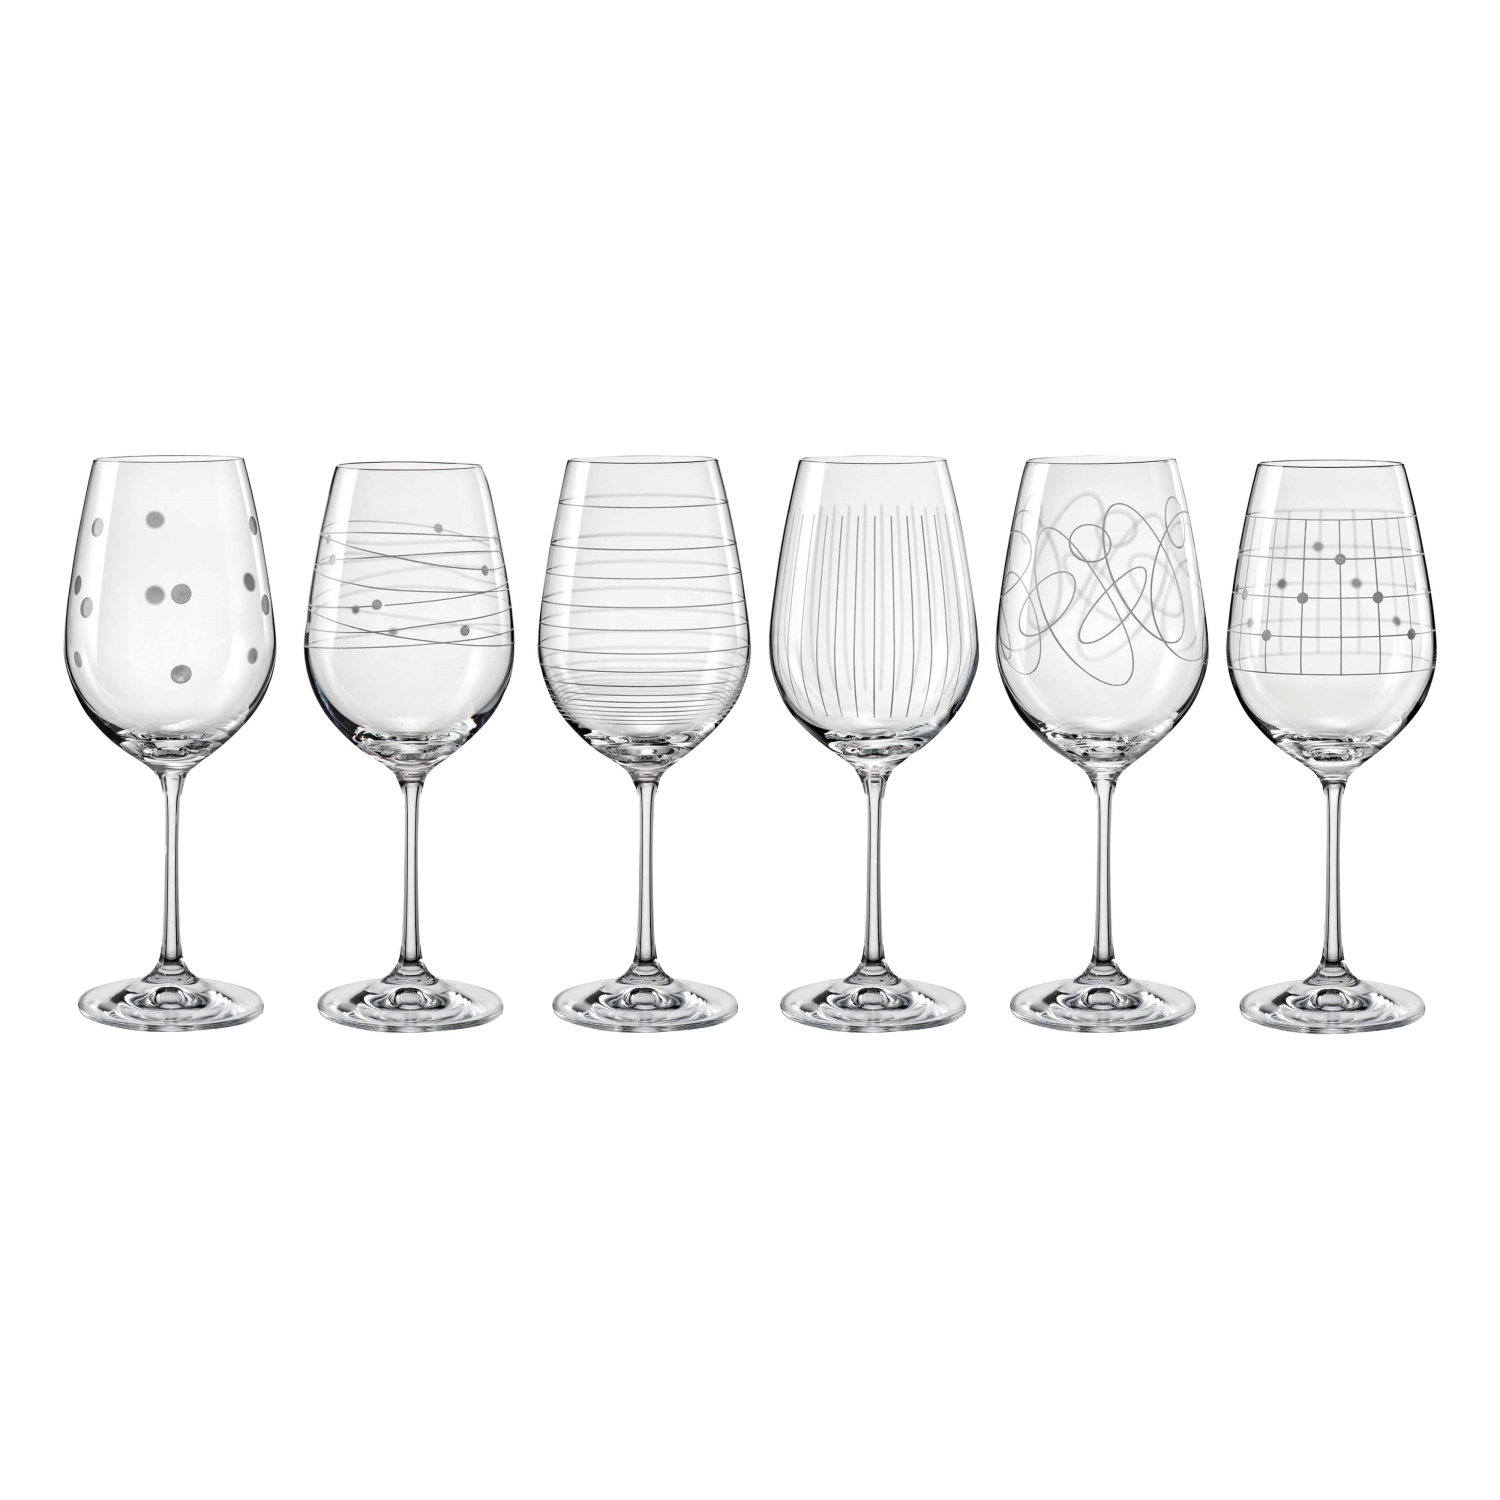 Bohemia Elements Wine Glass Setc6 450ml